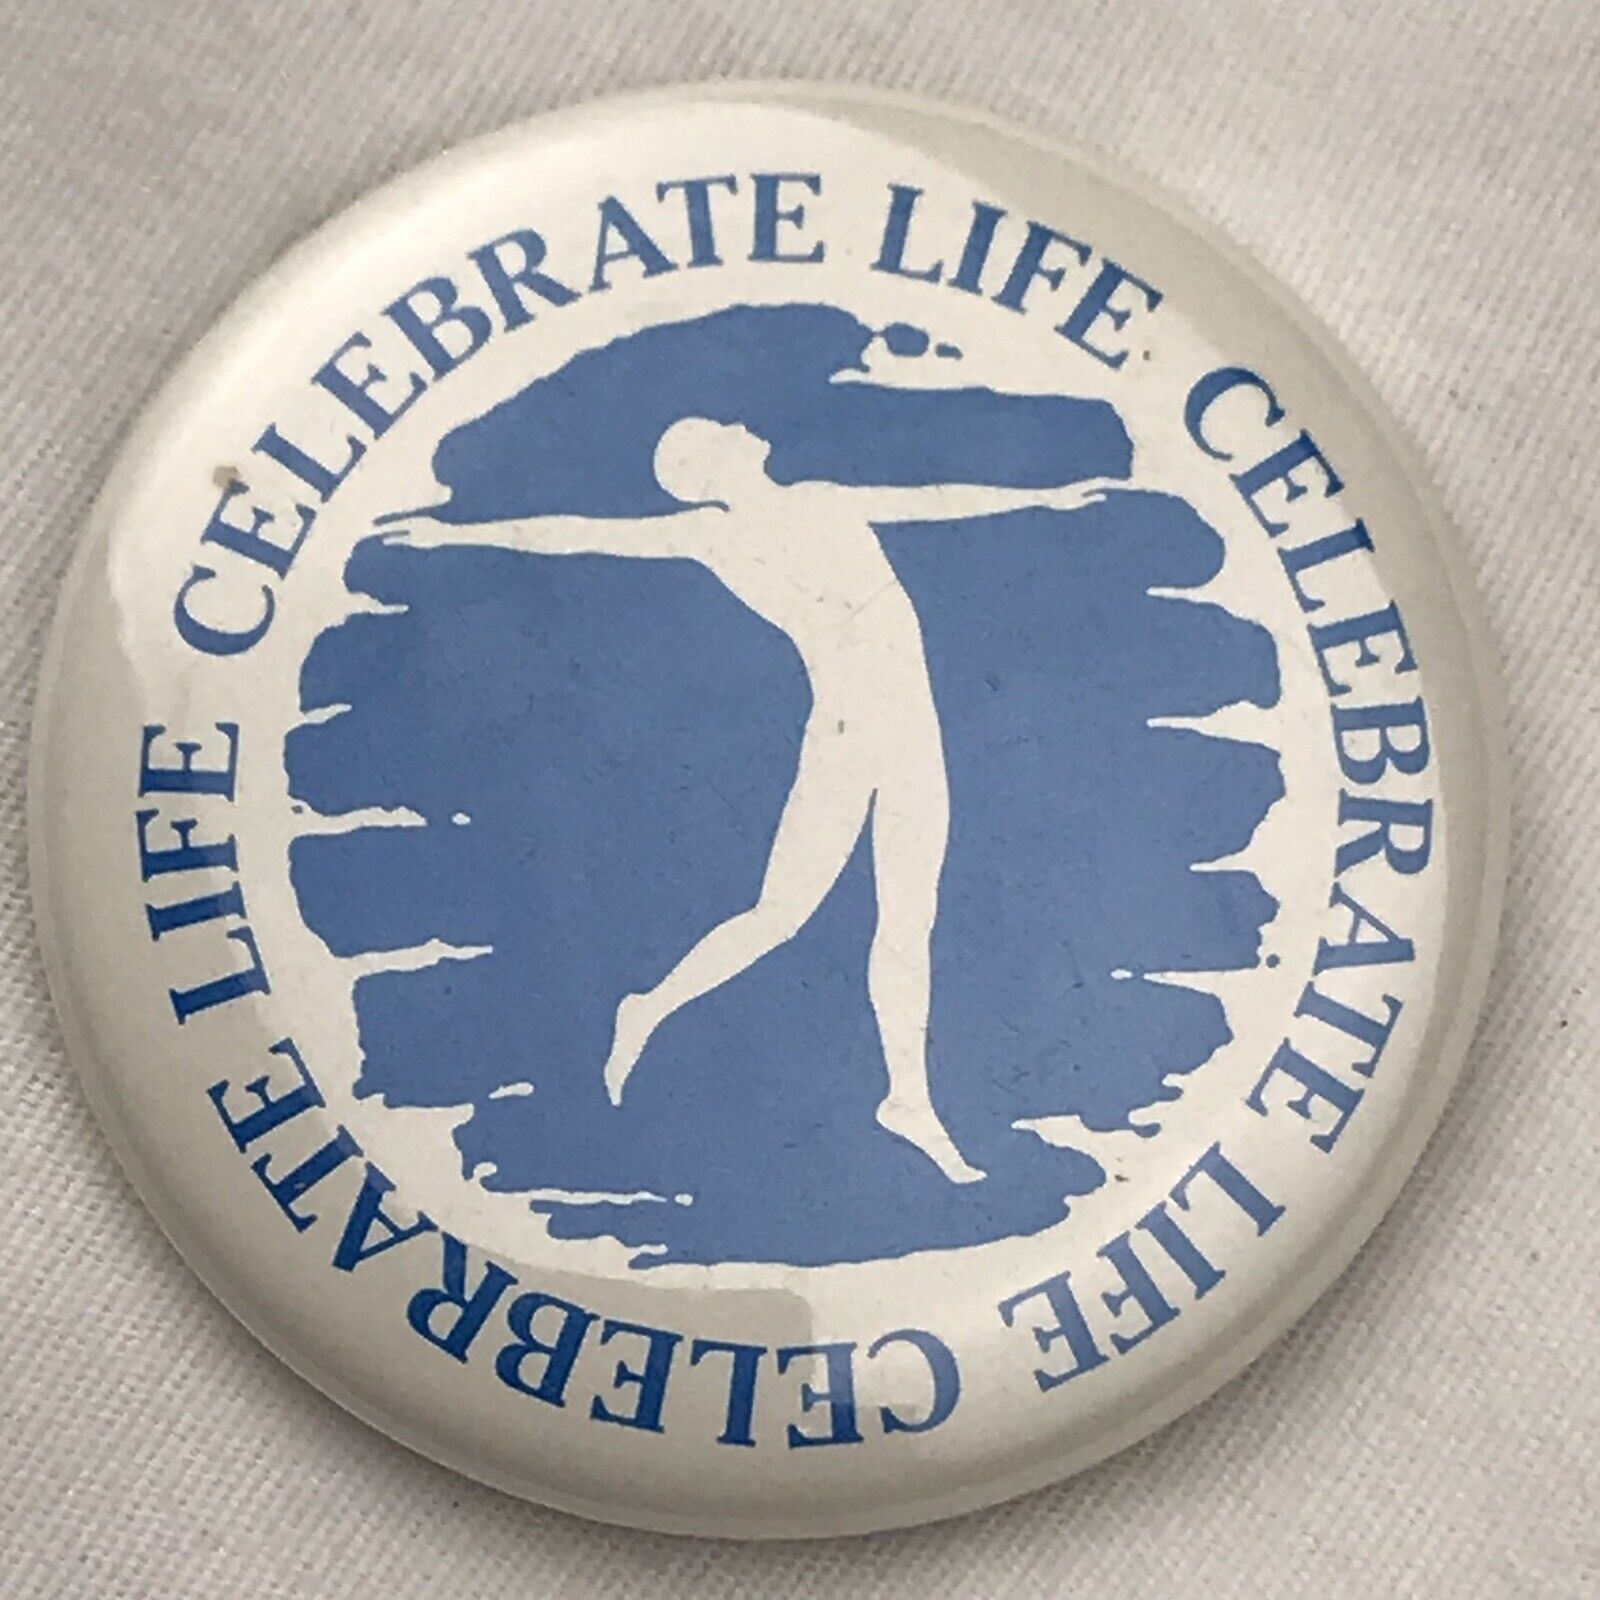 Celebrate Life Pin Button Vintage